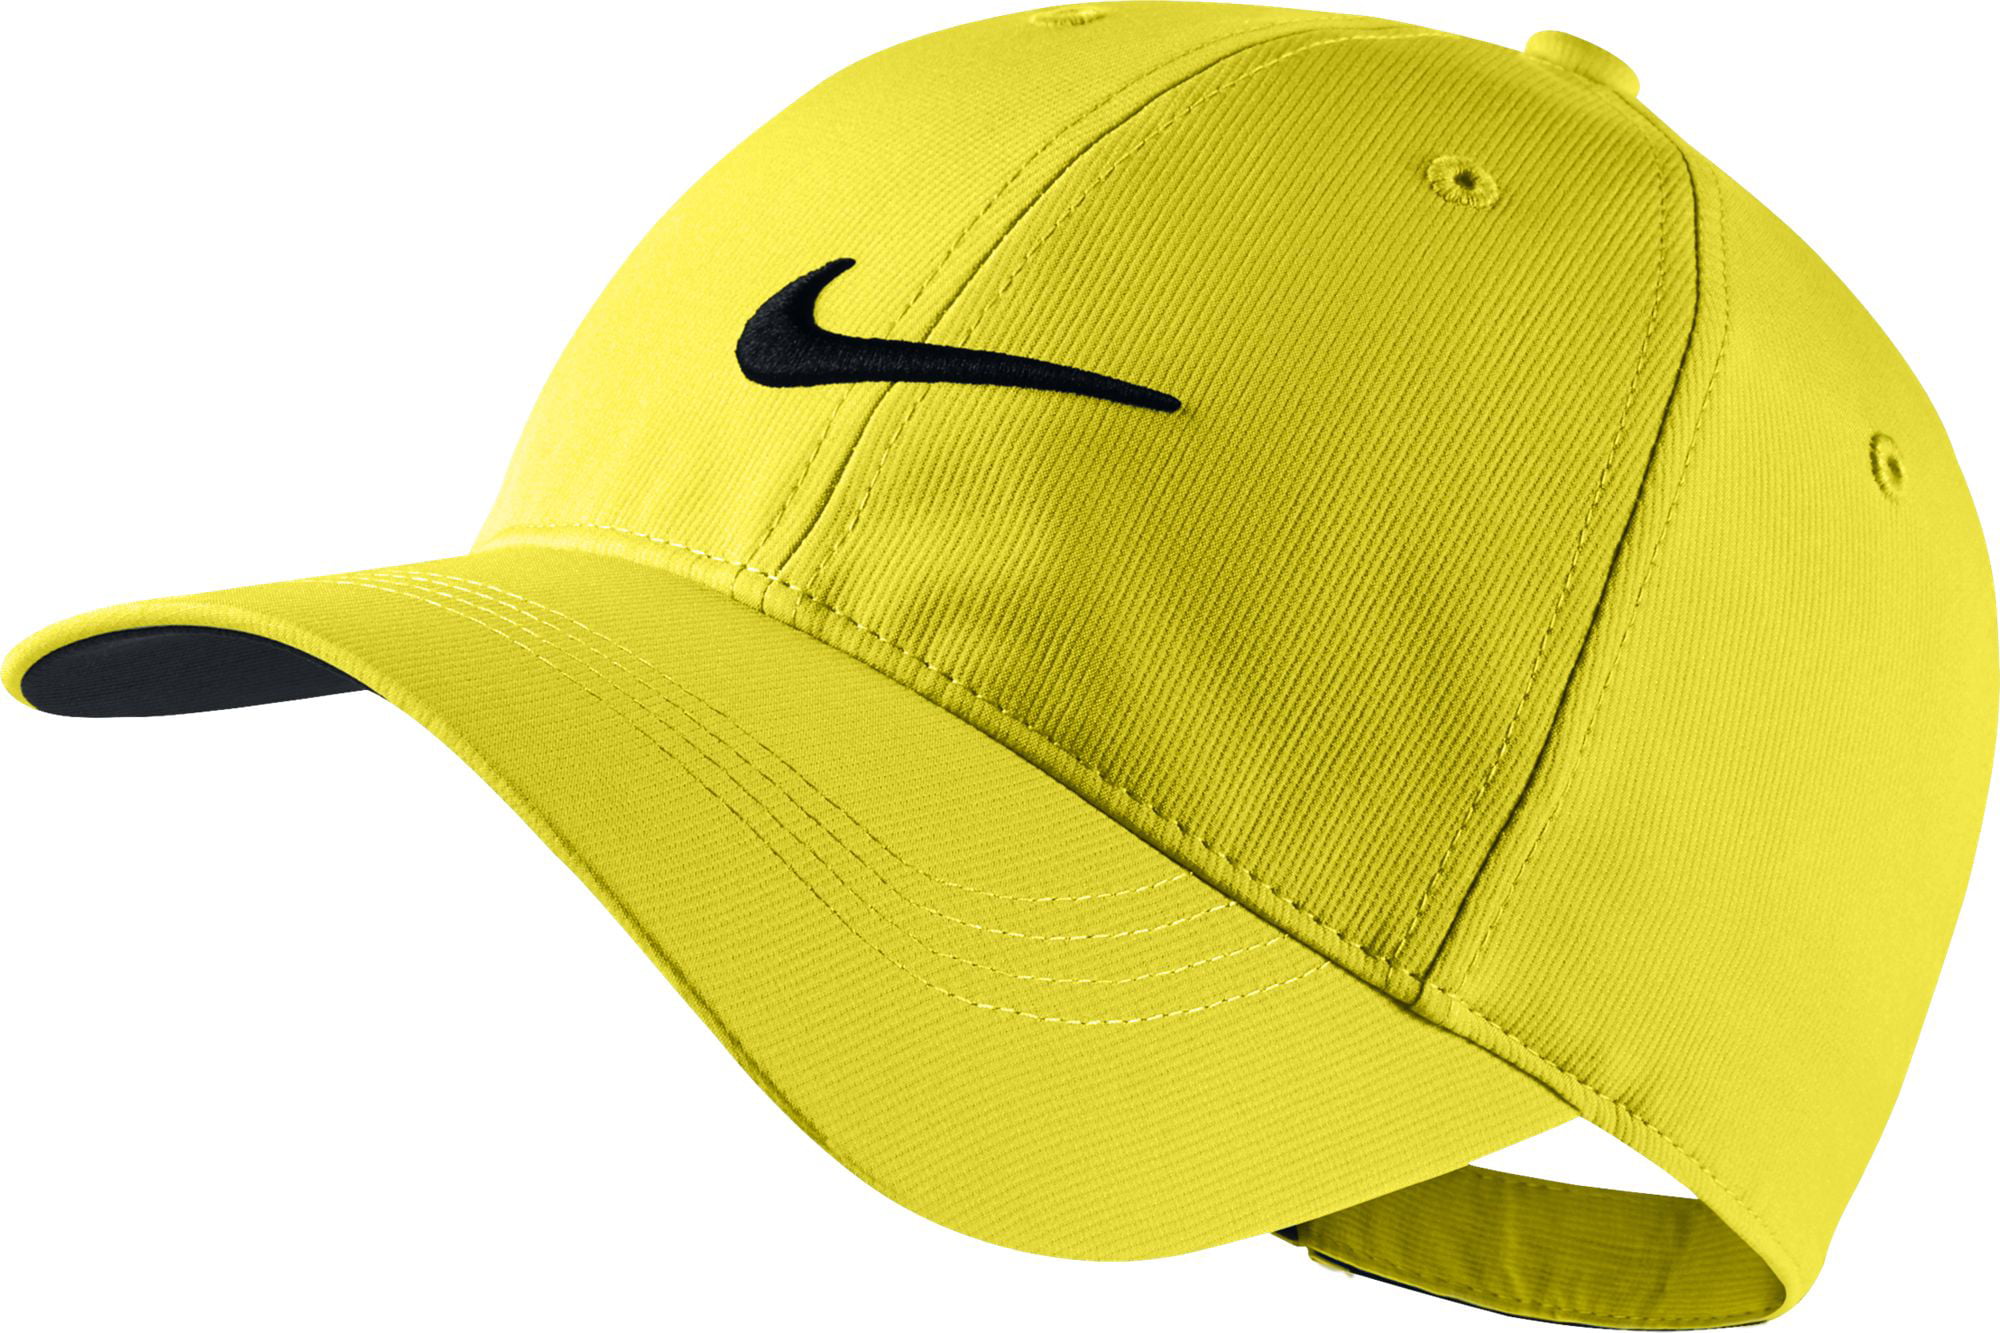 Nike Legacy91 dri-fit (golf cap white) 